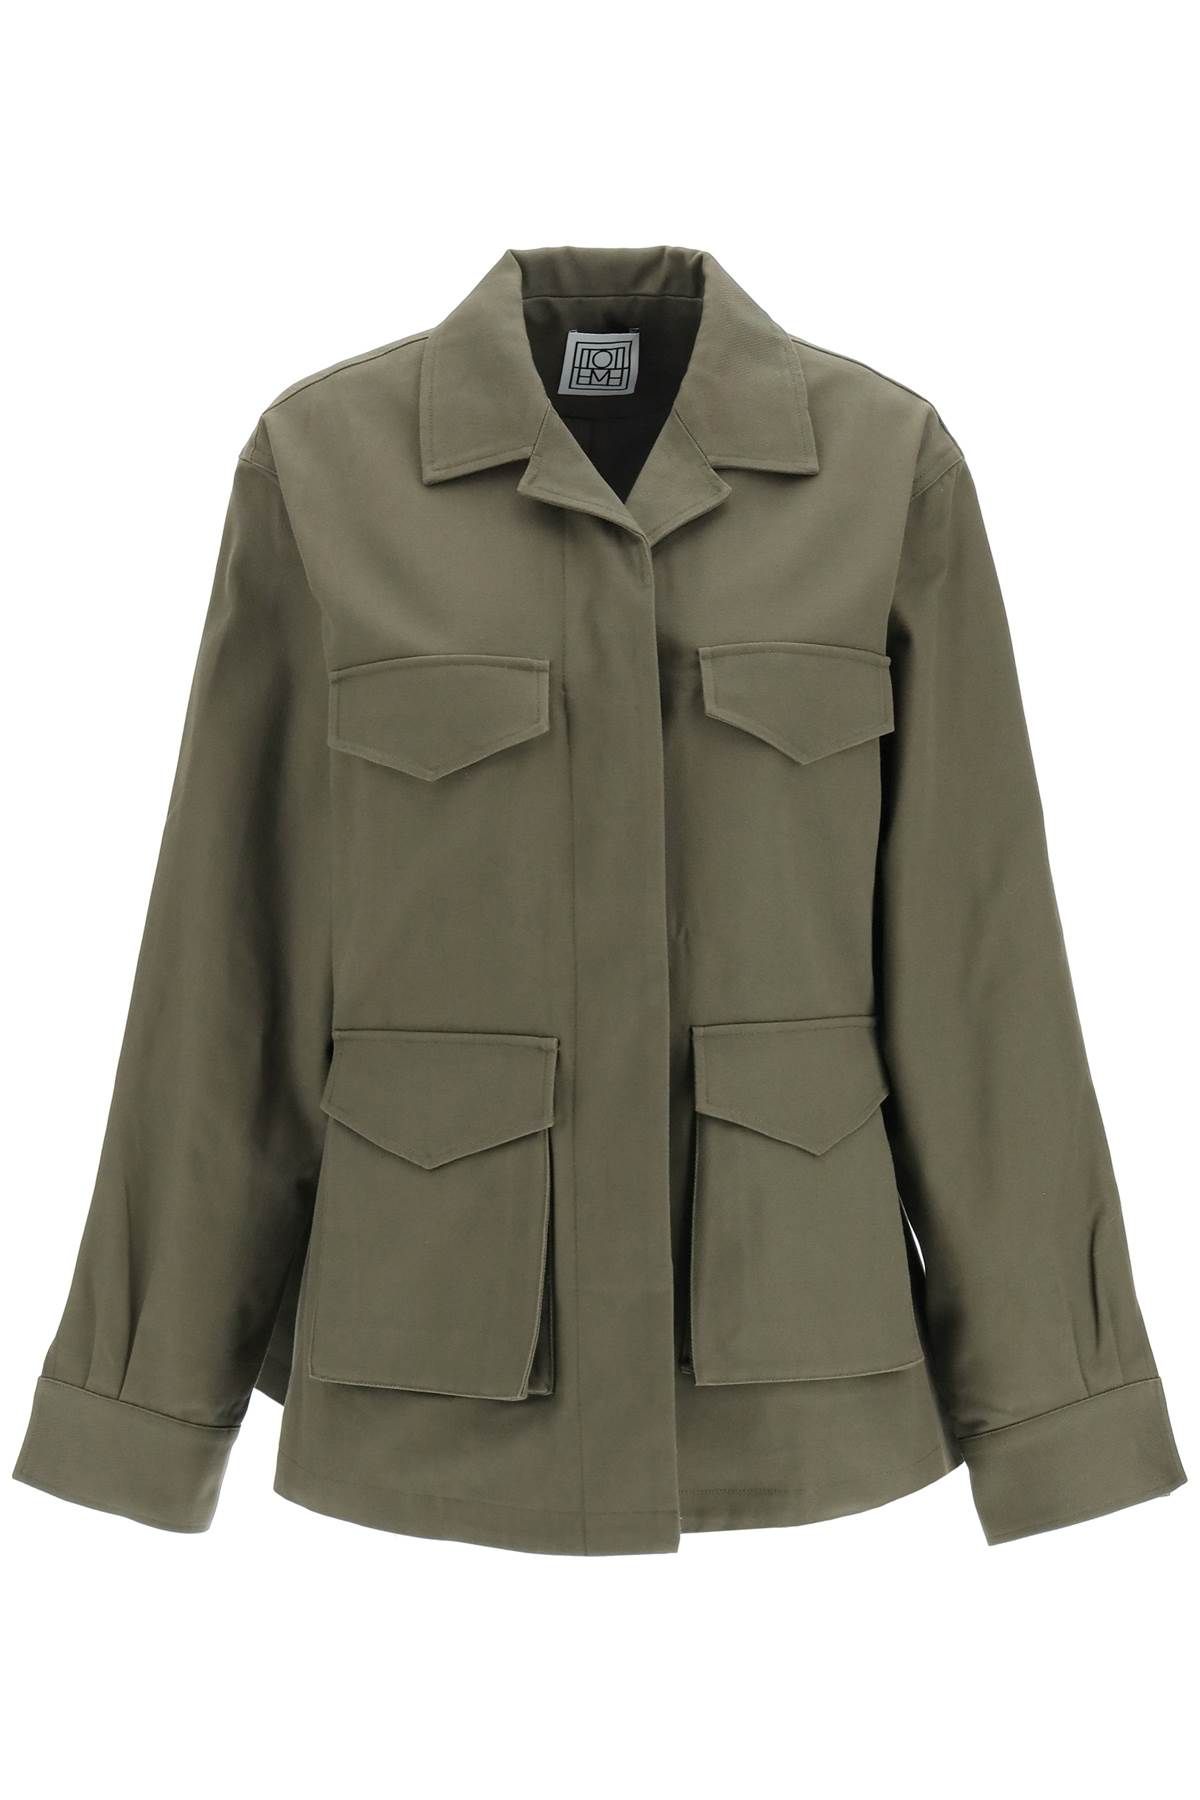 Toteme TOTEME cotton army jacket